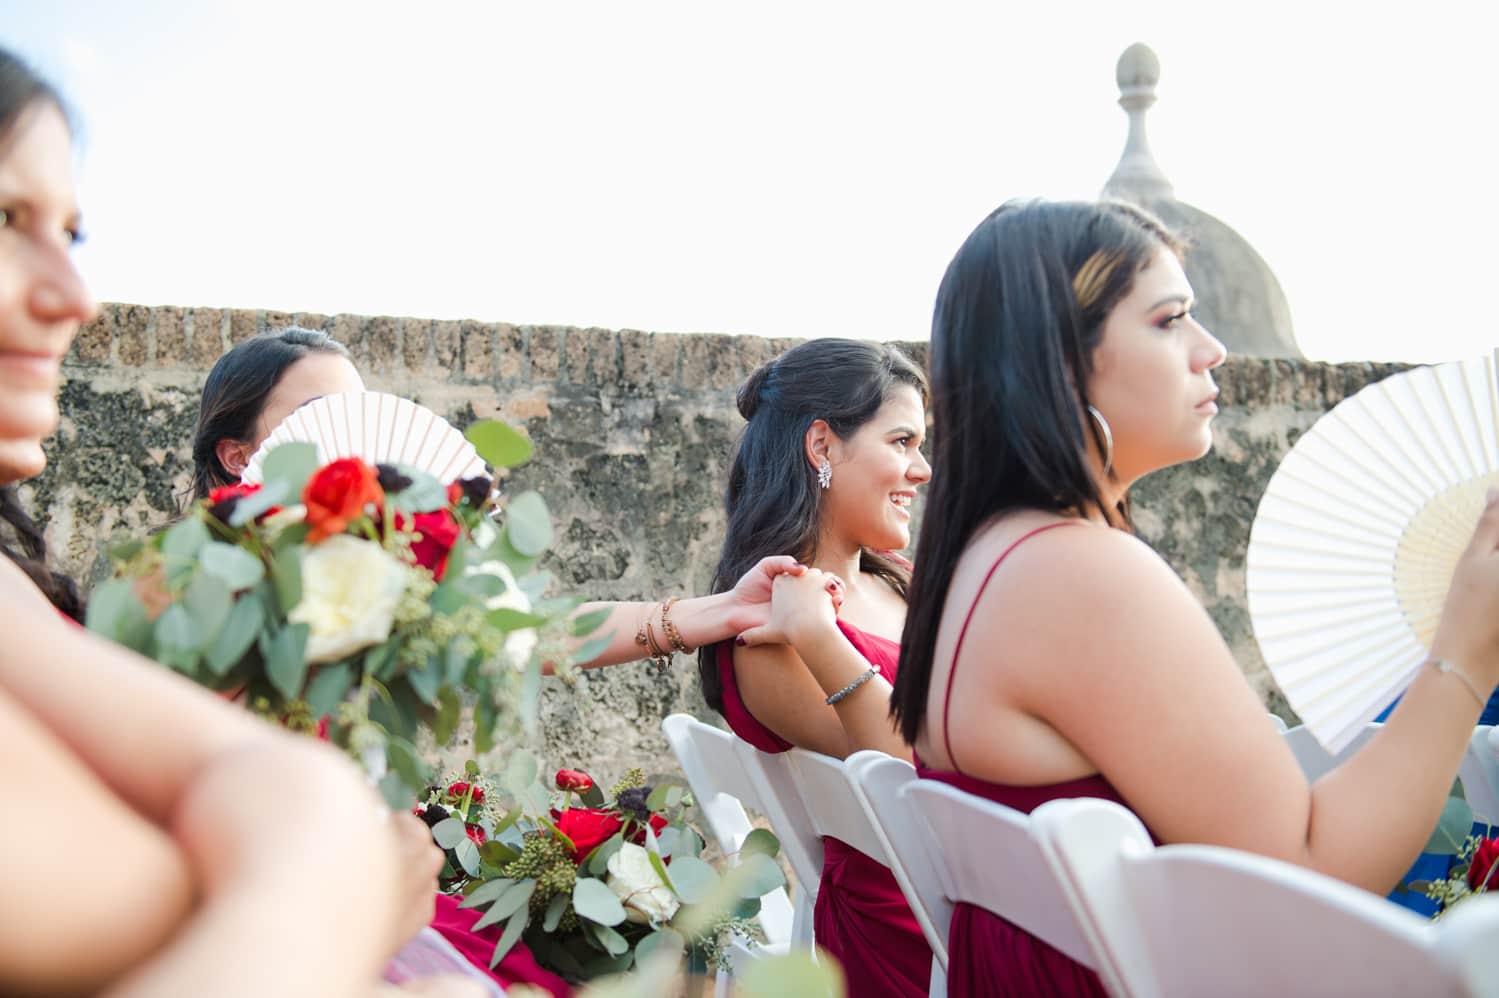 La Rogativa destination wedding ceremony at Old San Juan by photographer Camille Fontanez